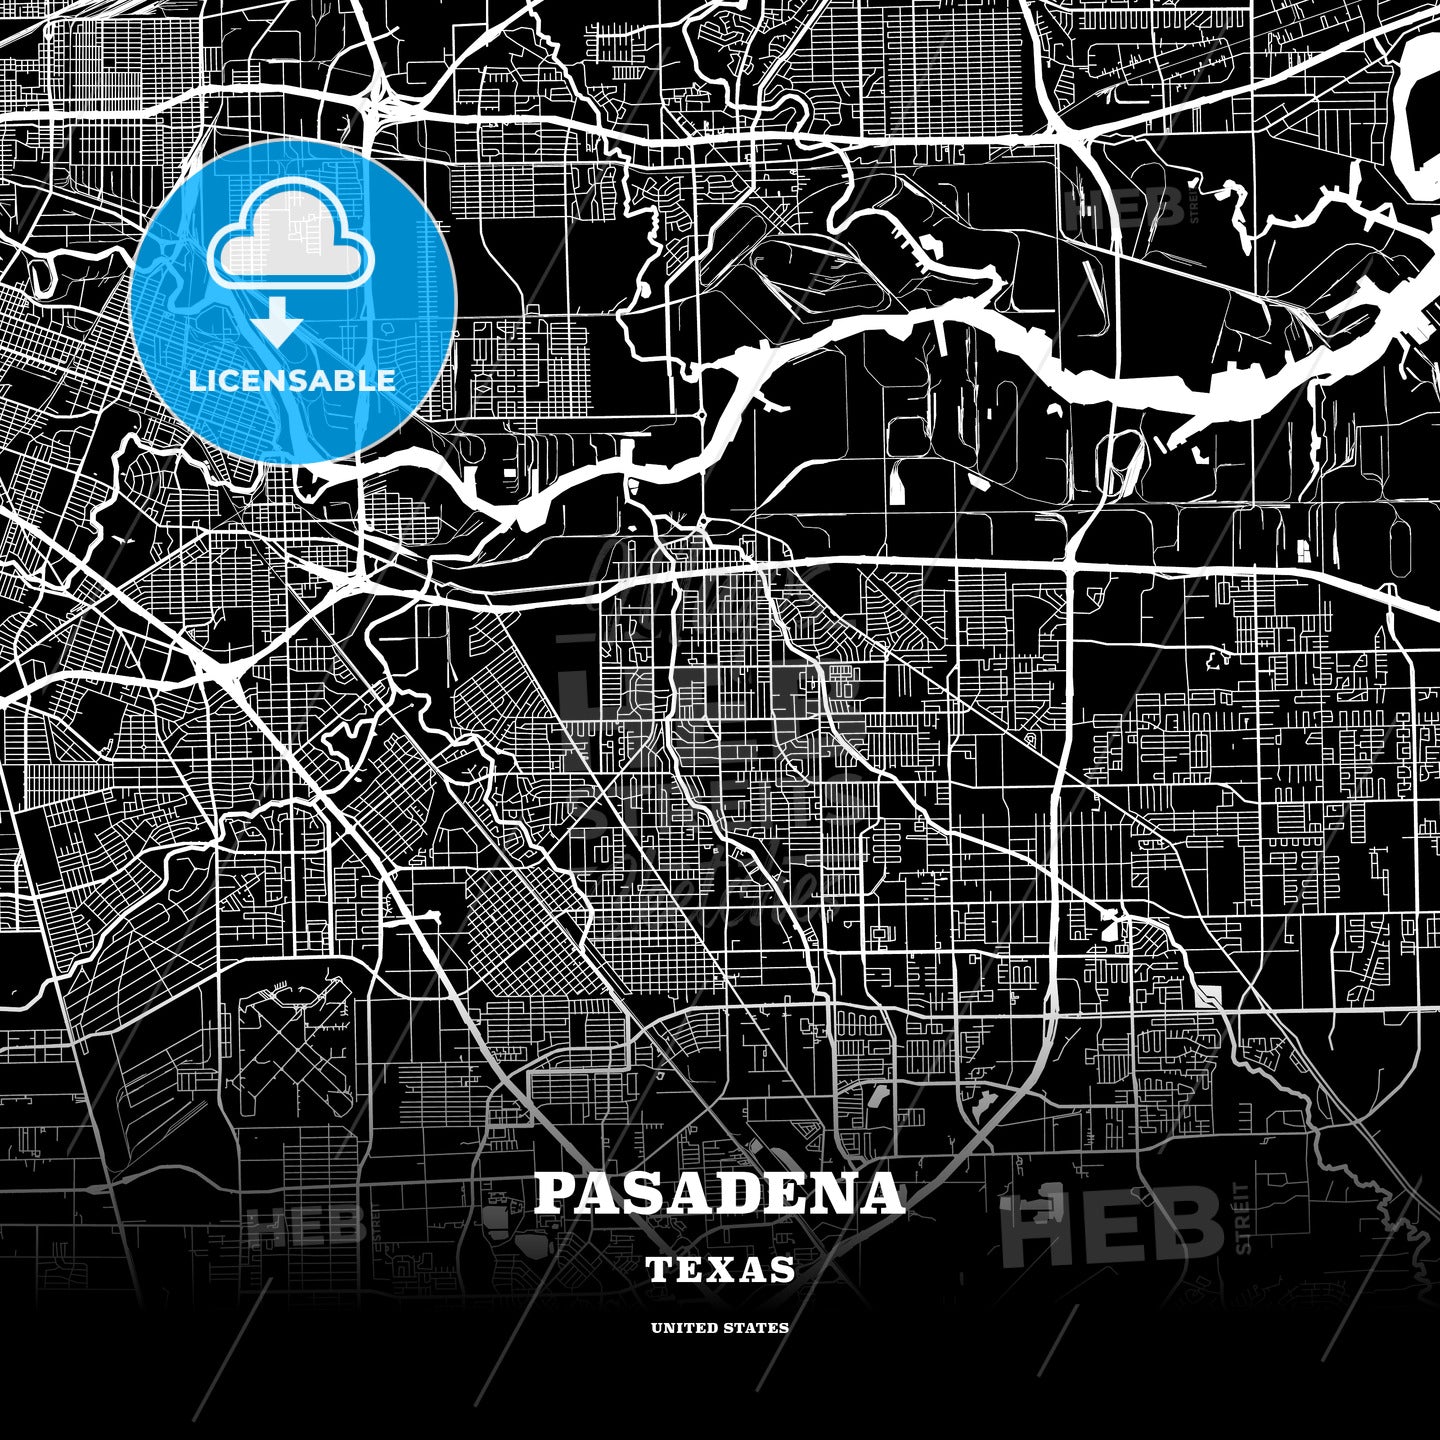 Pasadena, Texas, USA map